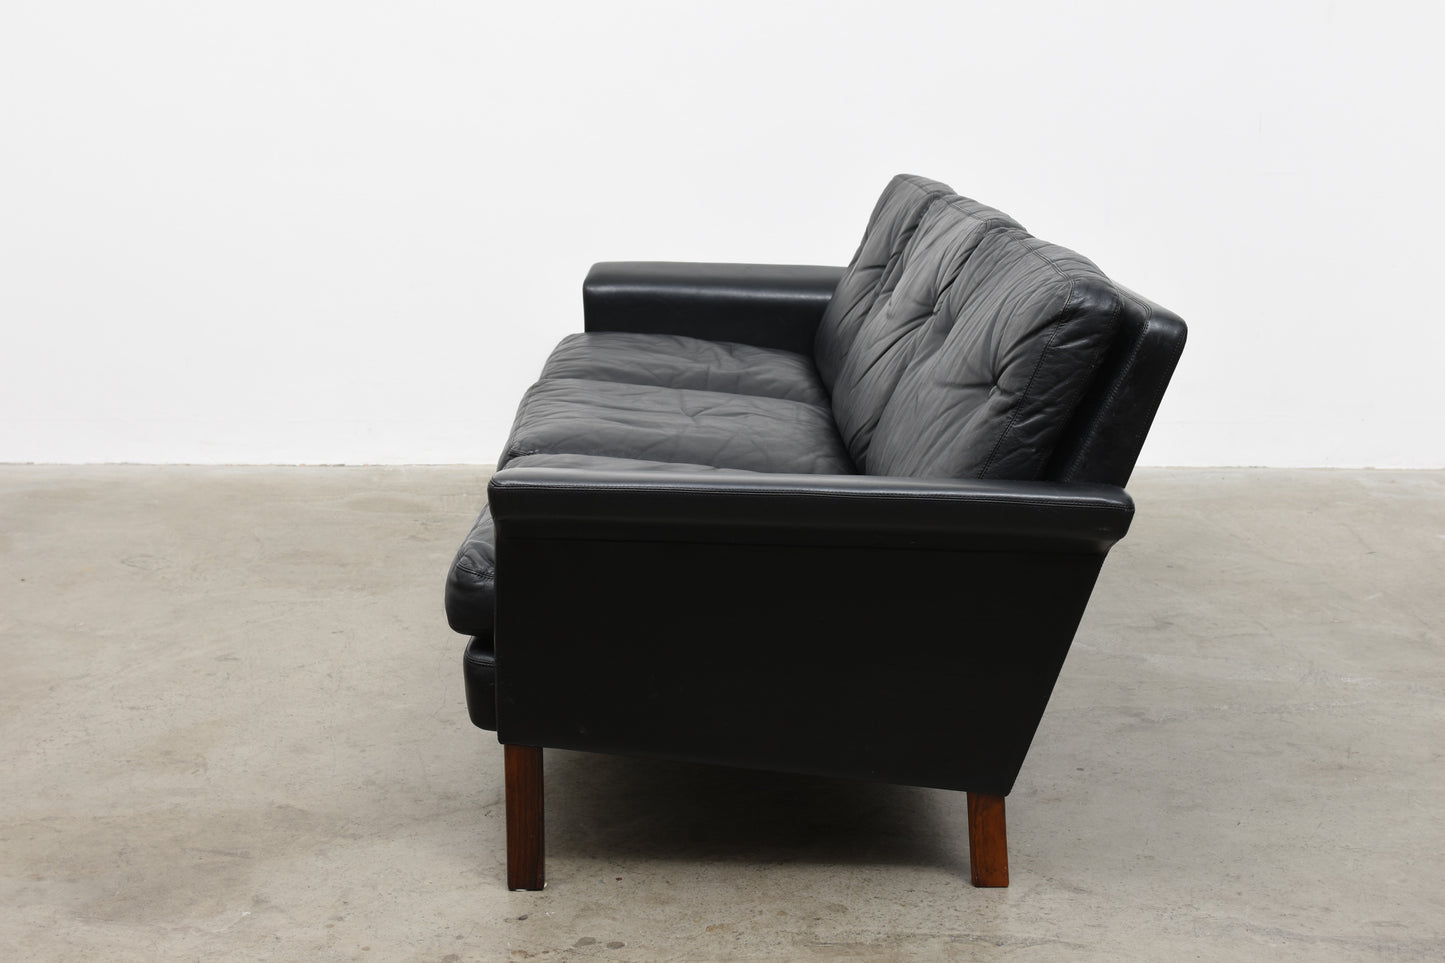 Three seat leather sofa by Hans Olsen